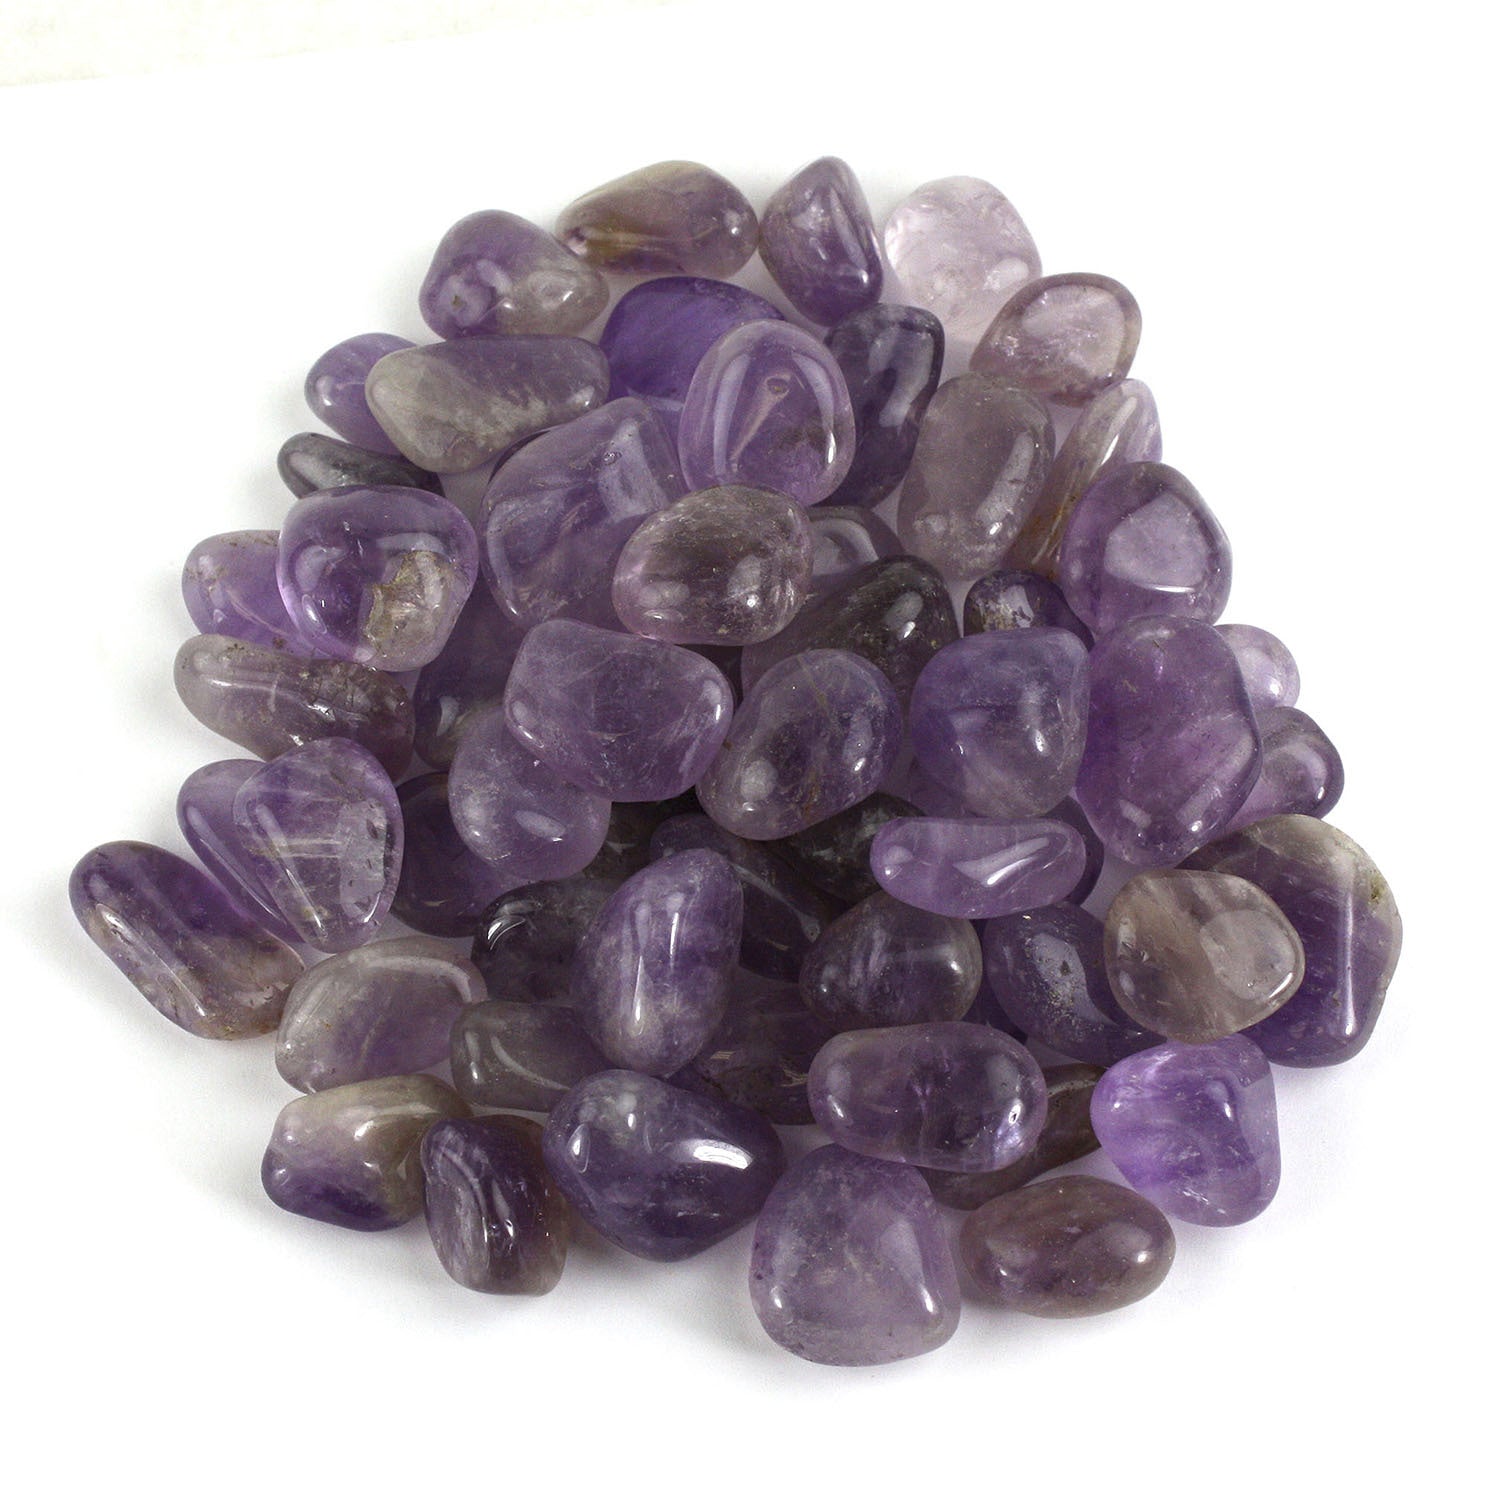 Bulk Tumbled Stone - Small - Purple Amethyst from Brazil Maraba